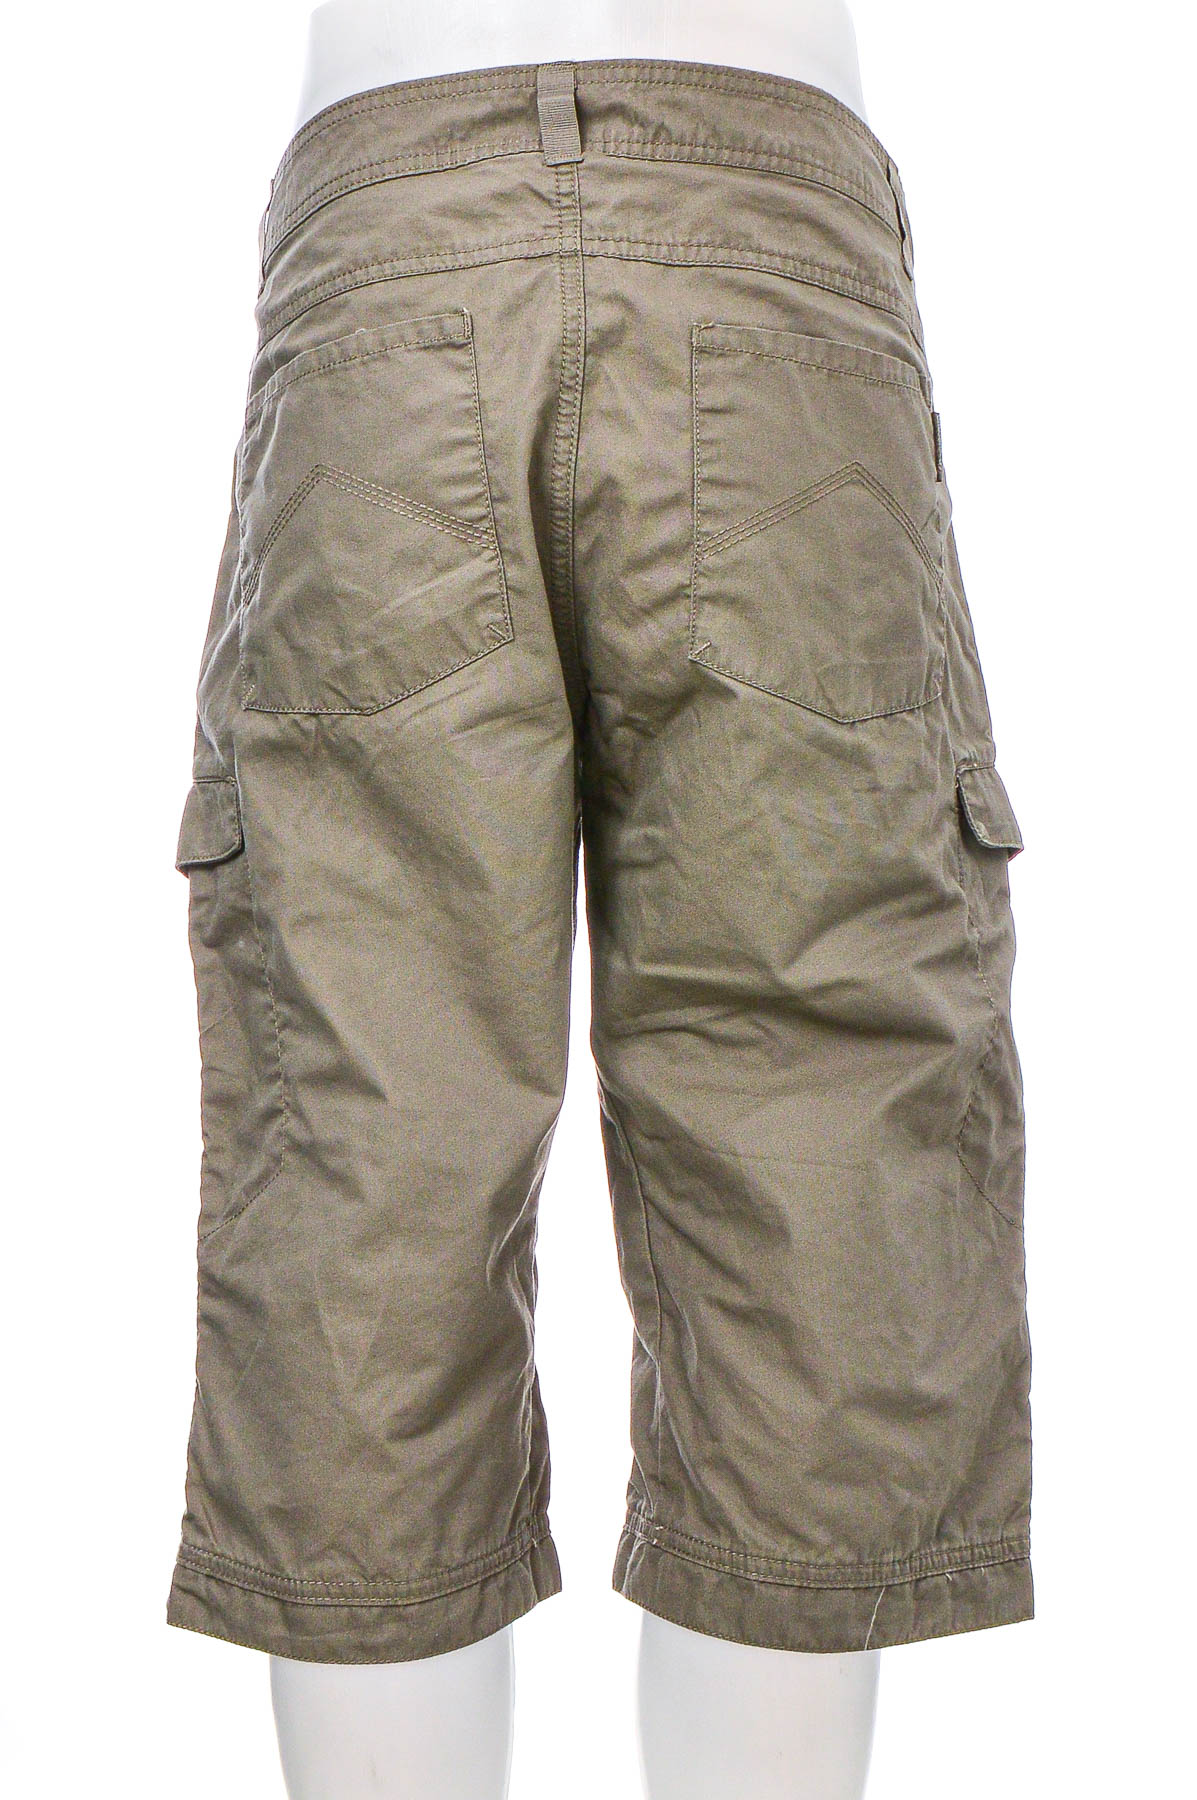 Men's shorts - DECATHLON - 1